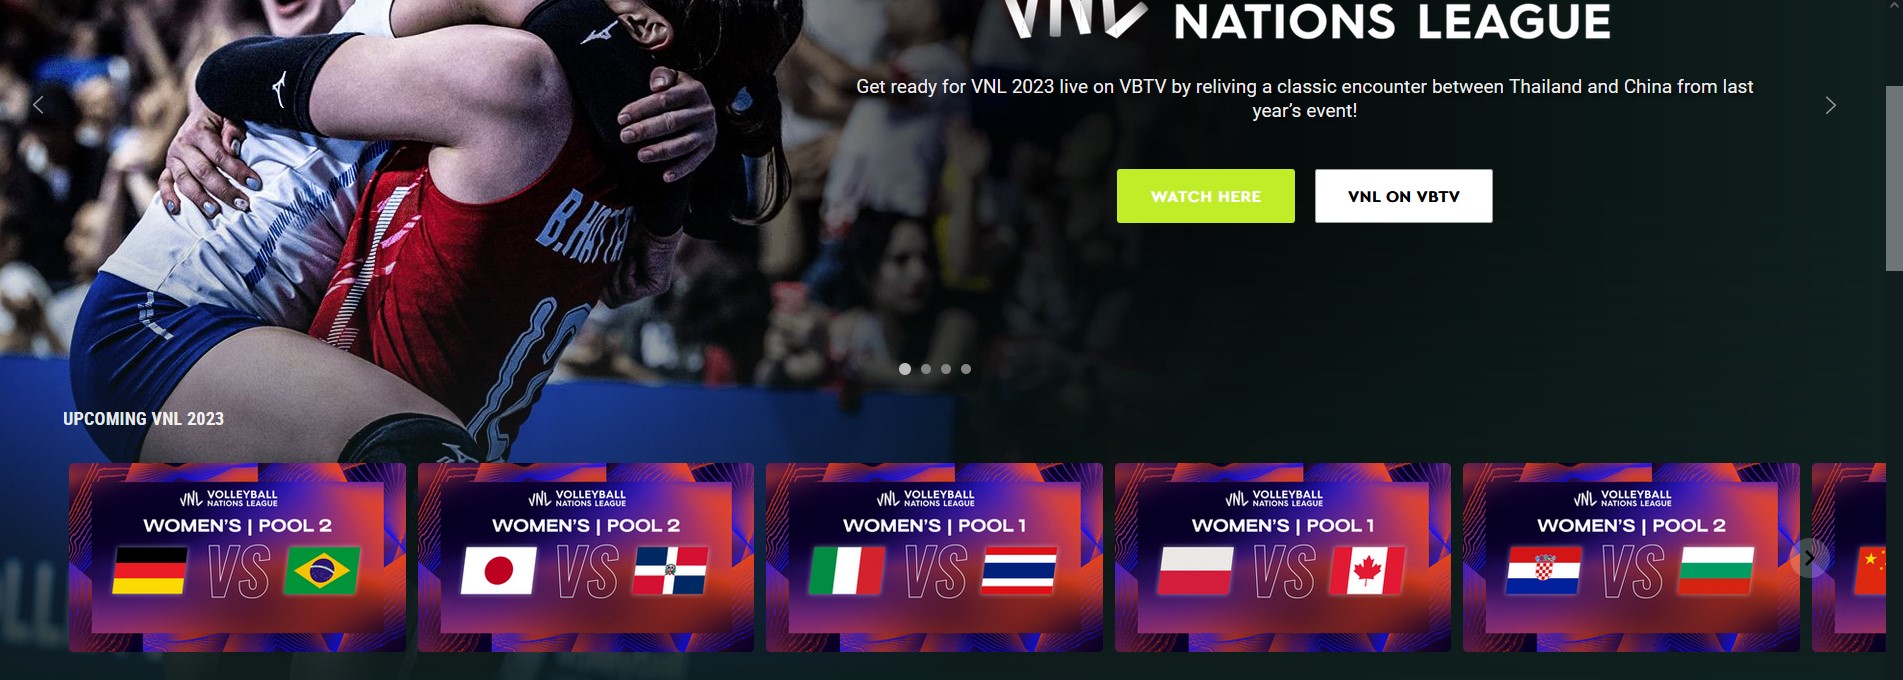 vnl volleyball live stream free